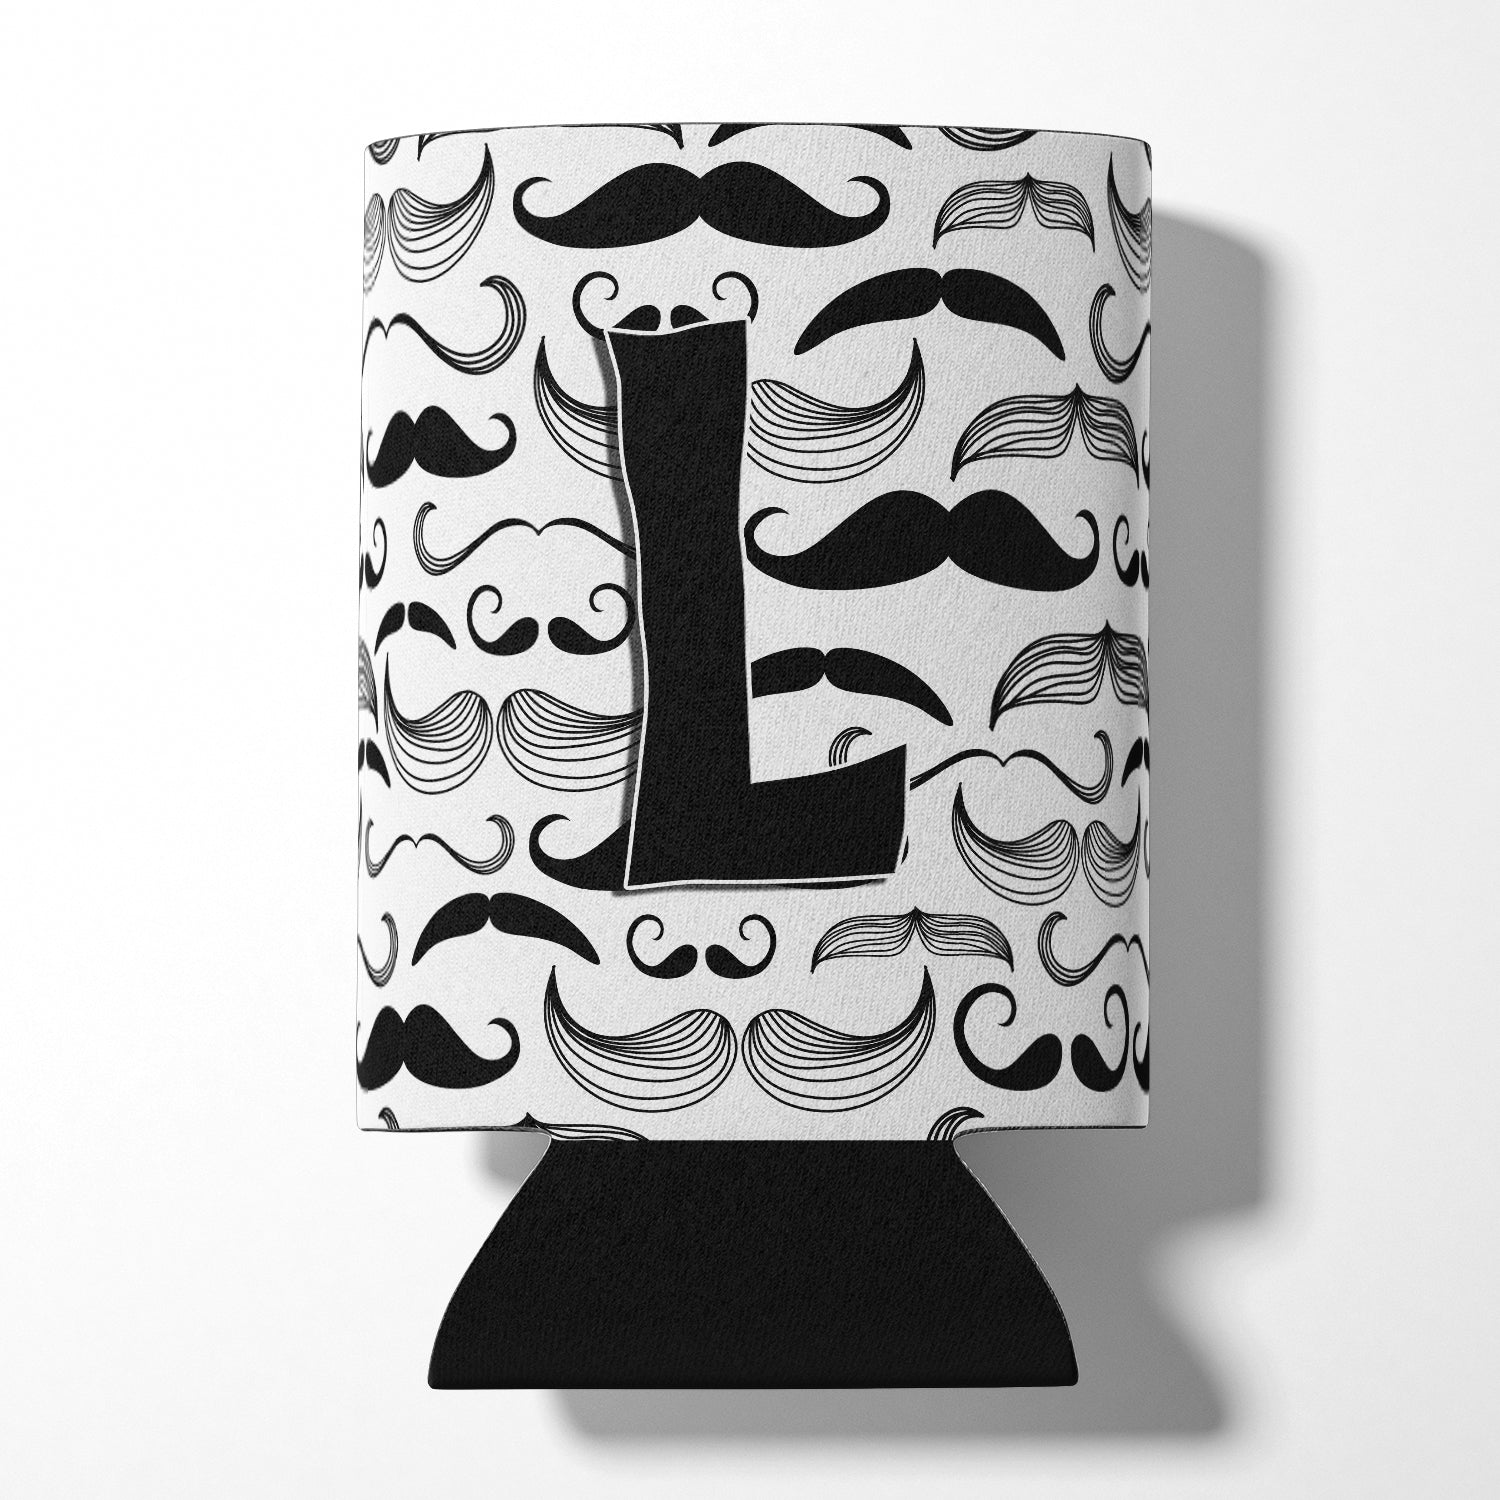 Letter L Moustache Initial Can or Bottle Hugger CJ2009-LCC.